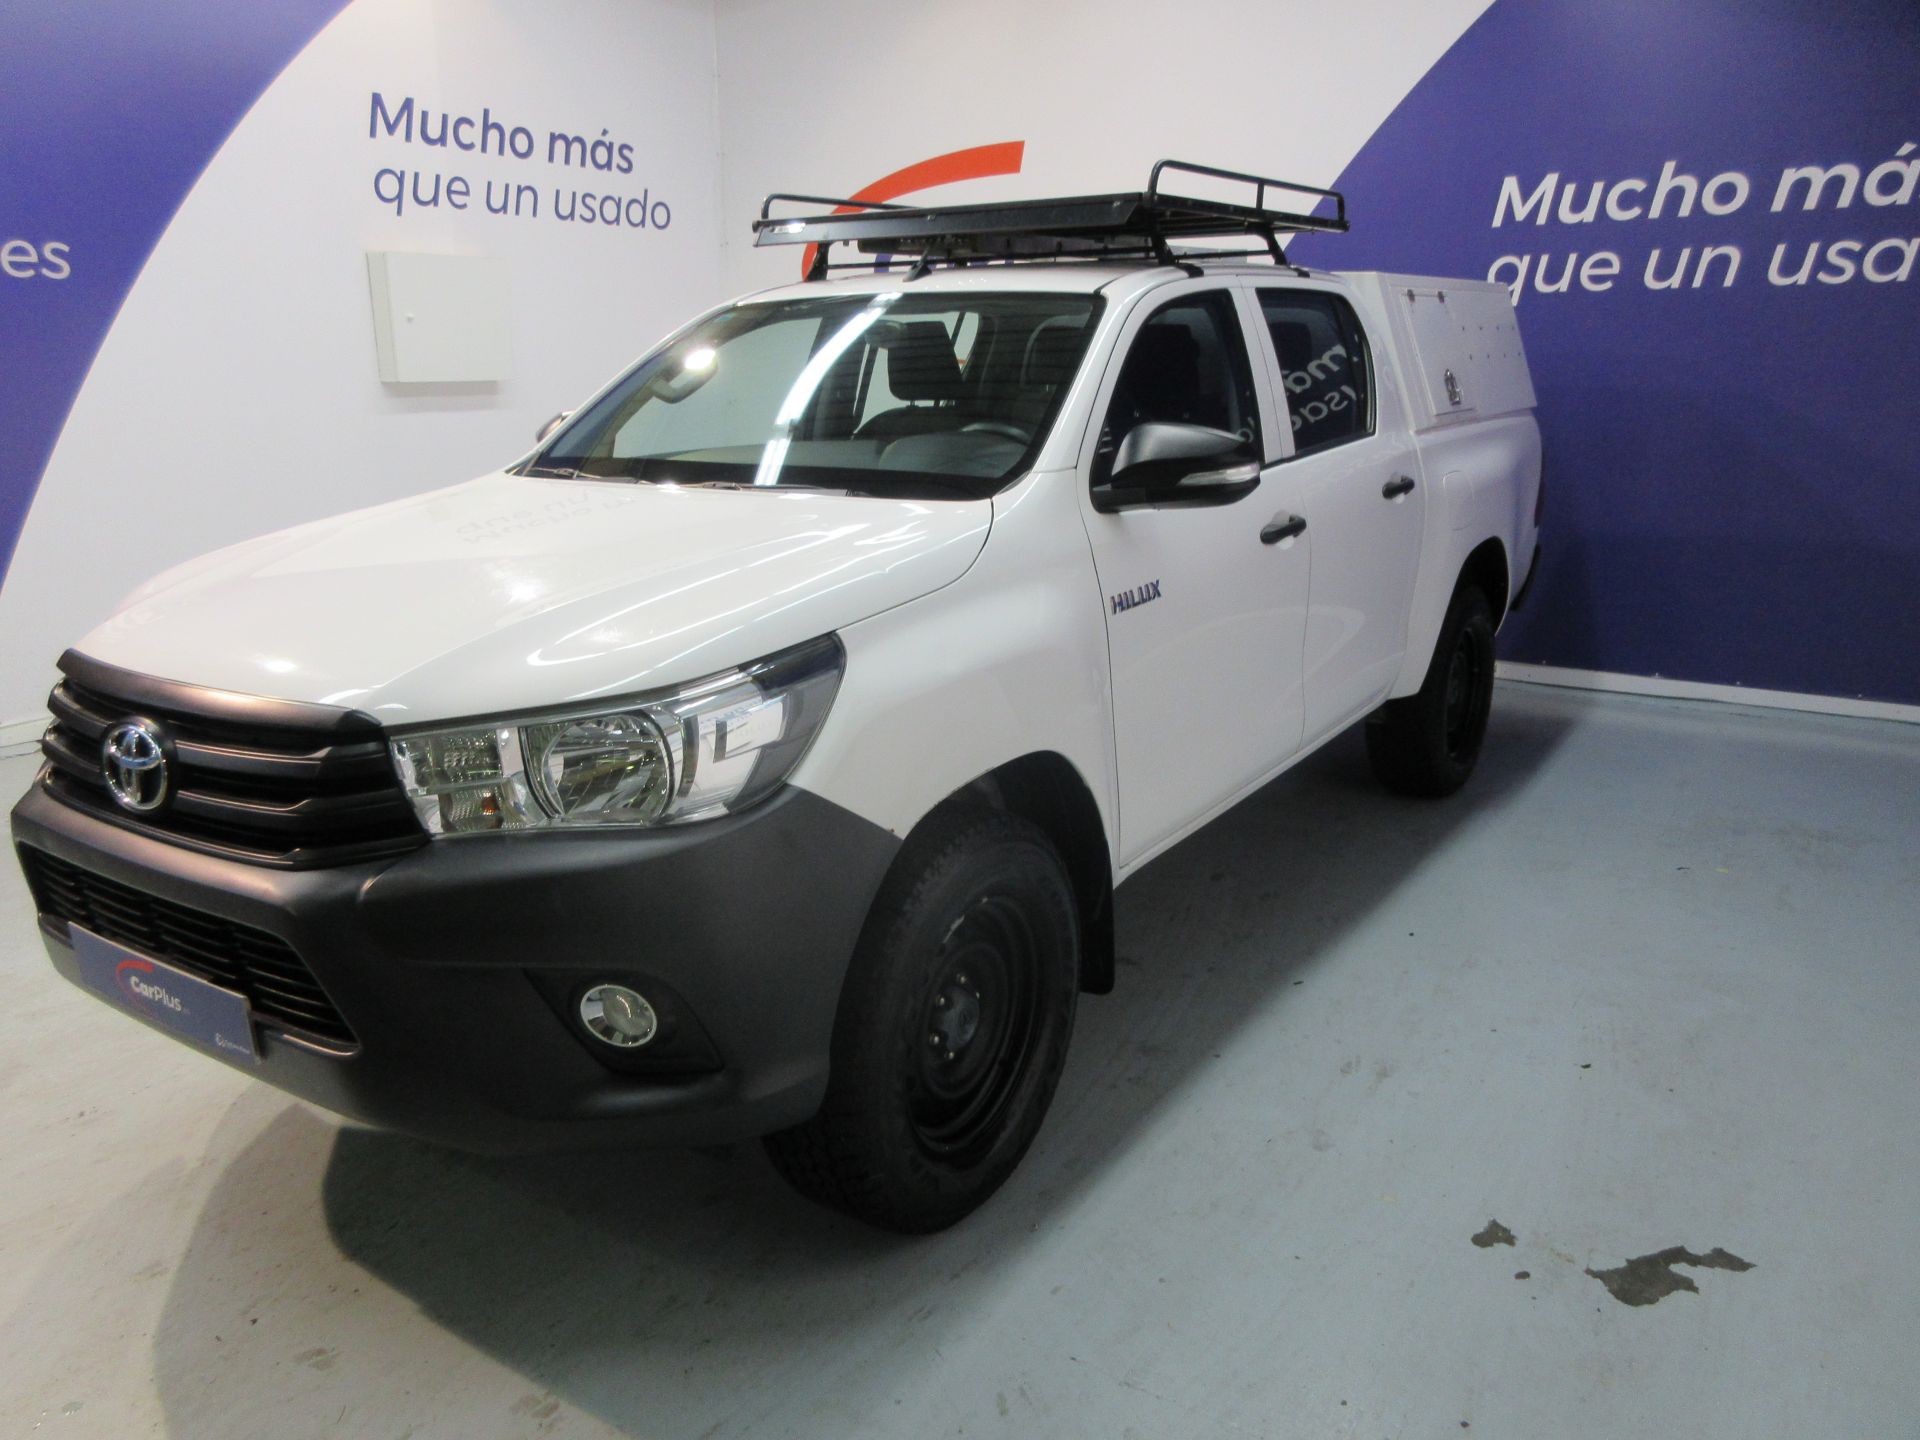 Toyota Hilux 2.4 D-4D Cabina Doble GX 4x4 segunda mano Madrid